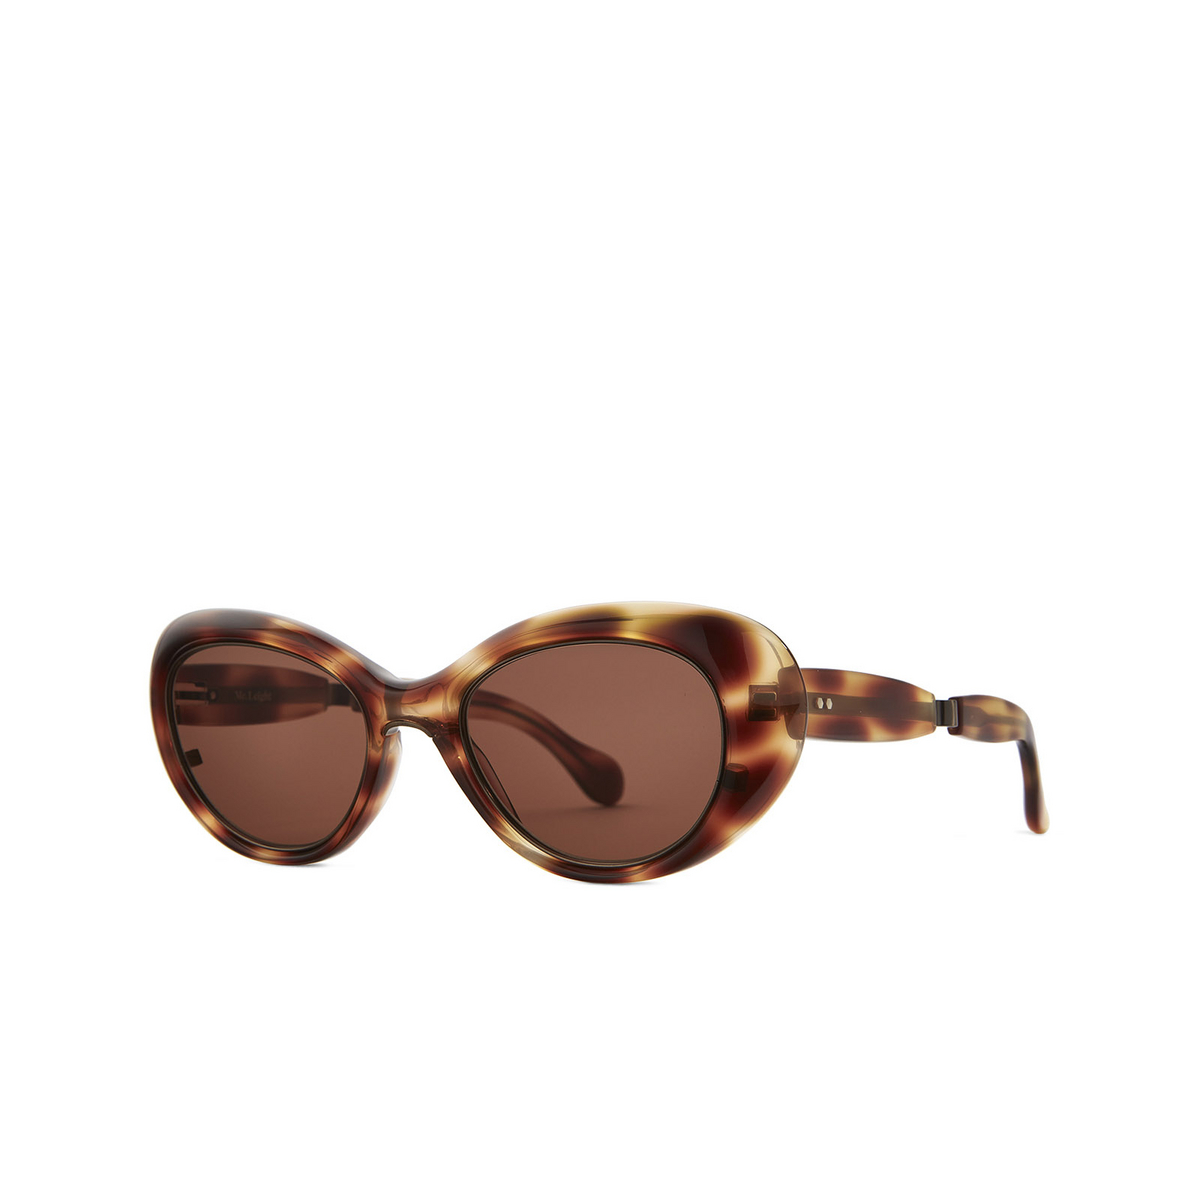 Mr. Leight SELMA S Sunglasses BLONT/MO Blondie Tortoise - three-quarters view